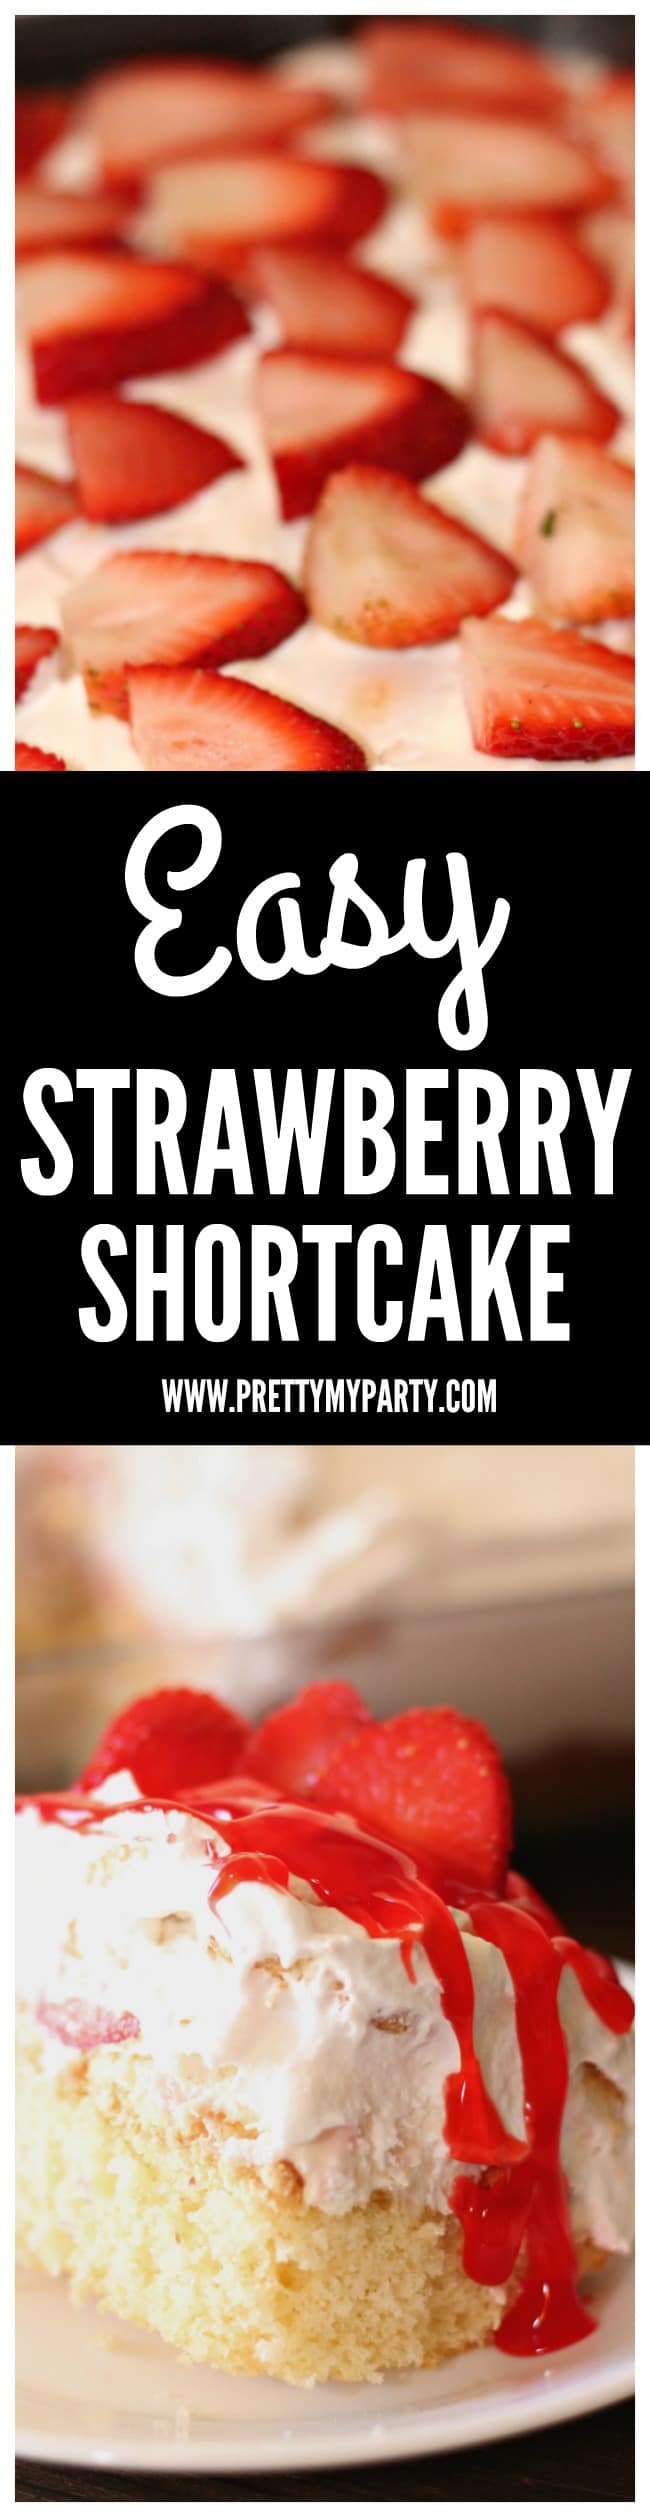 Easy Strawberry Shortcake Recipe - Pretty My Party